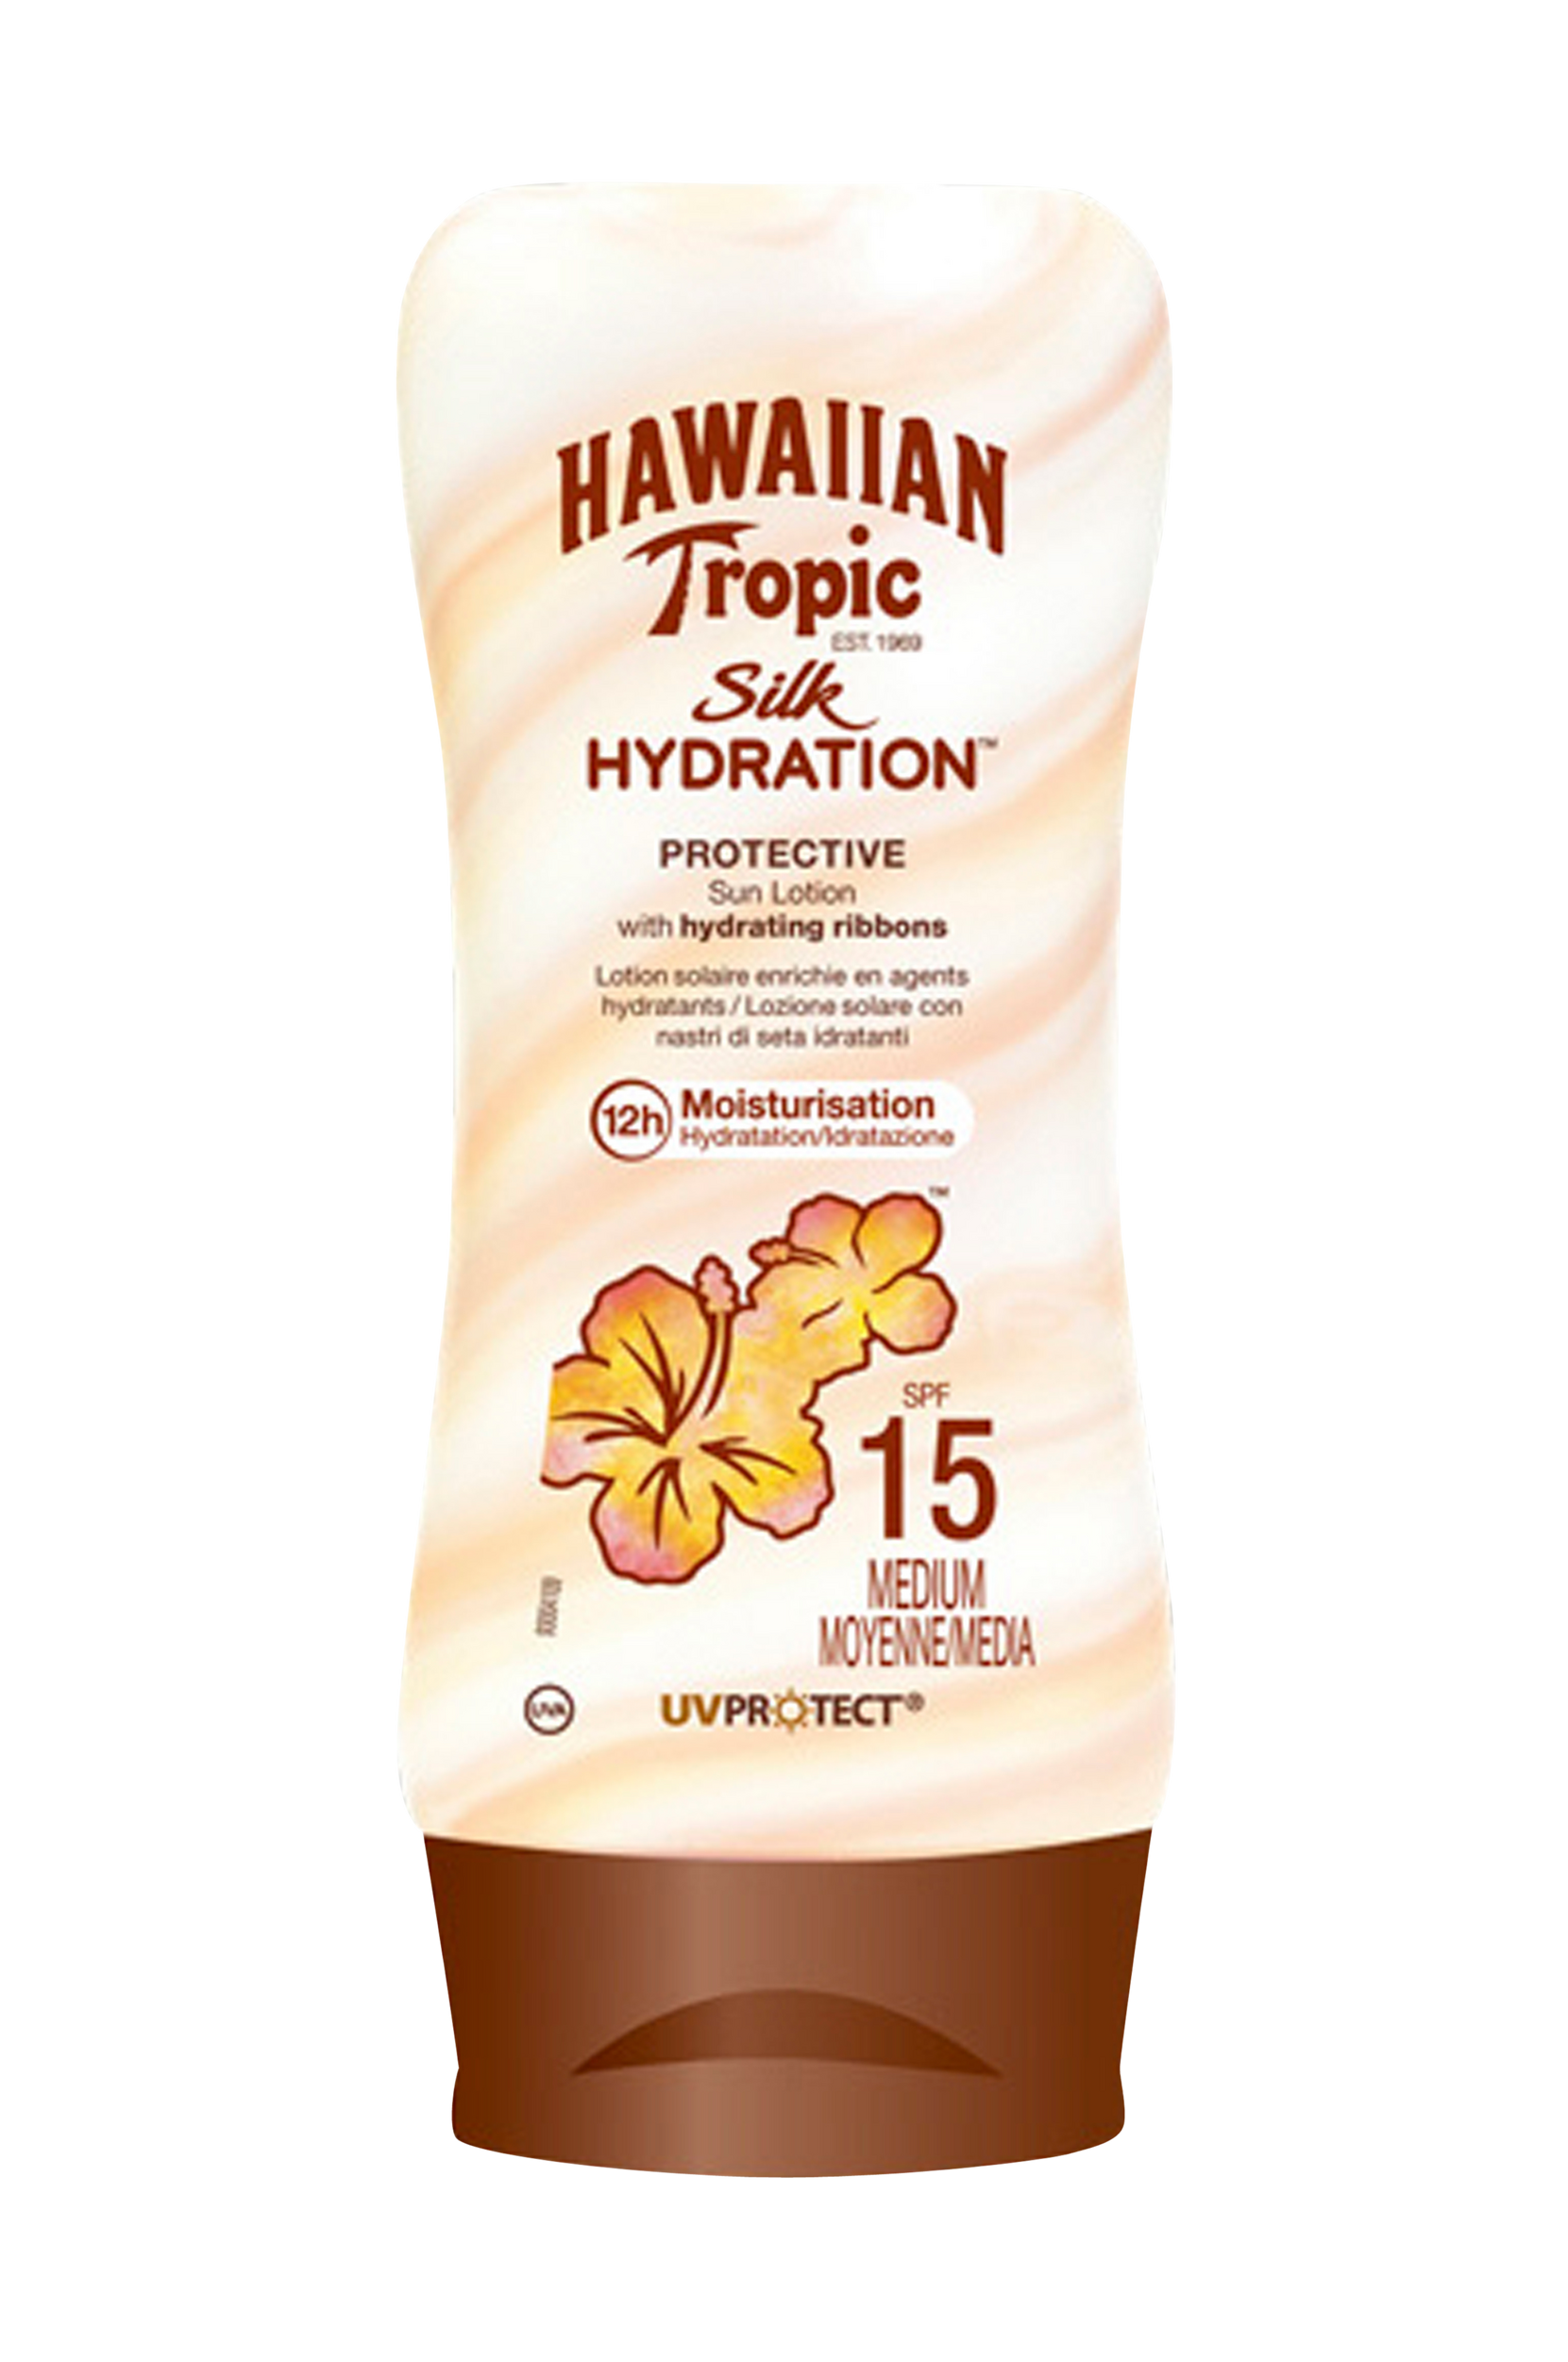 Silk Hydration Lotion Spf 15, Hawaiian Tropic